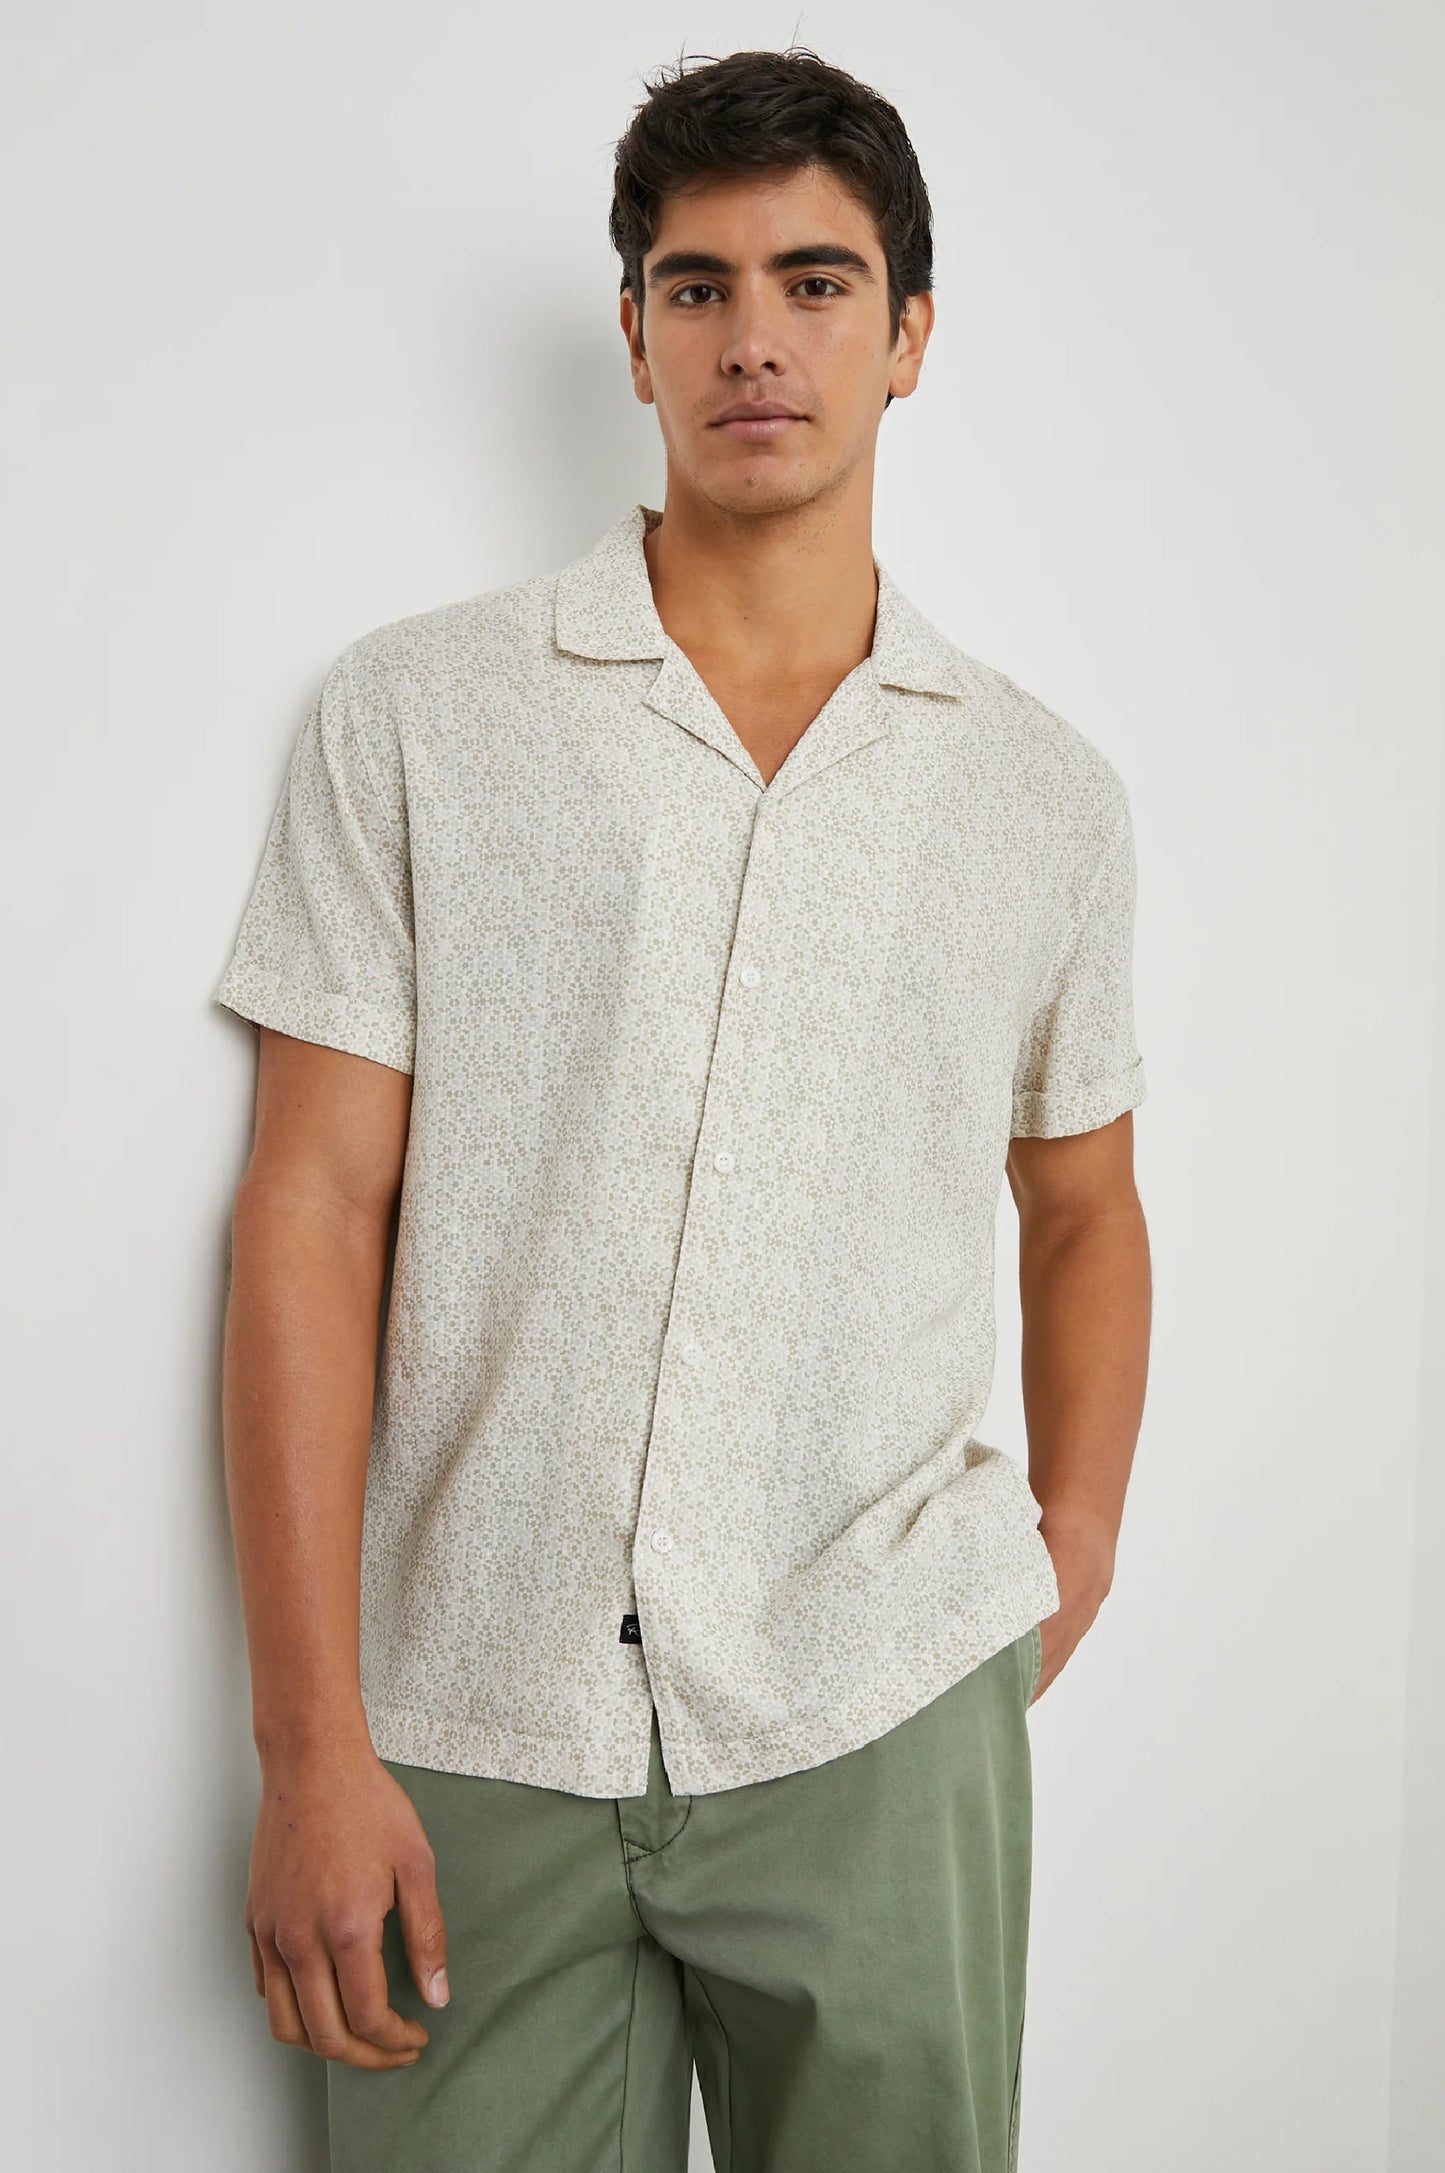 The Painted Tile Khaki Amalfi Short Sleeve Shirt by Rails